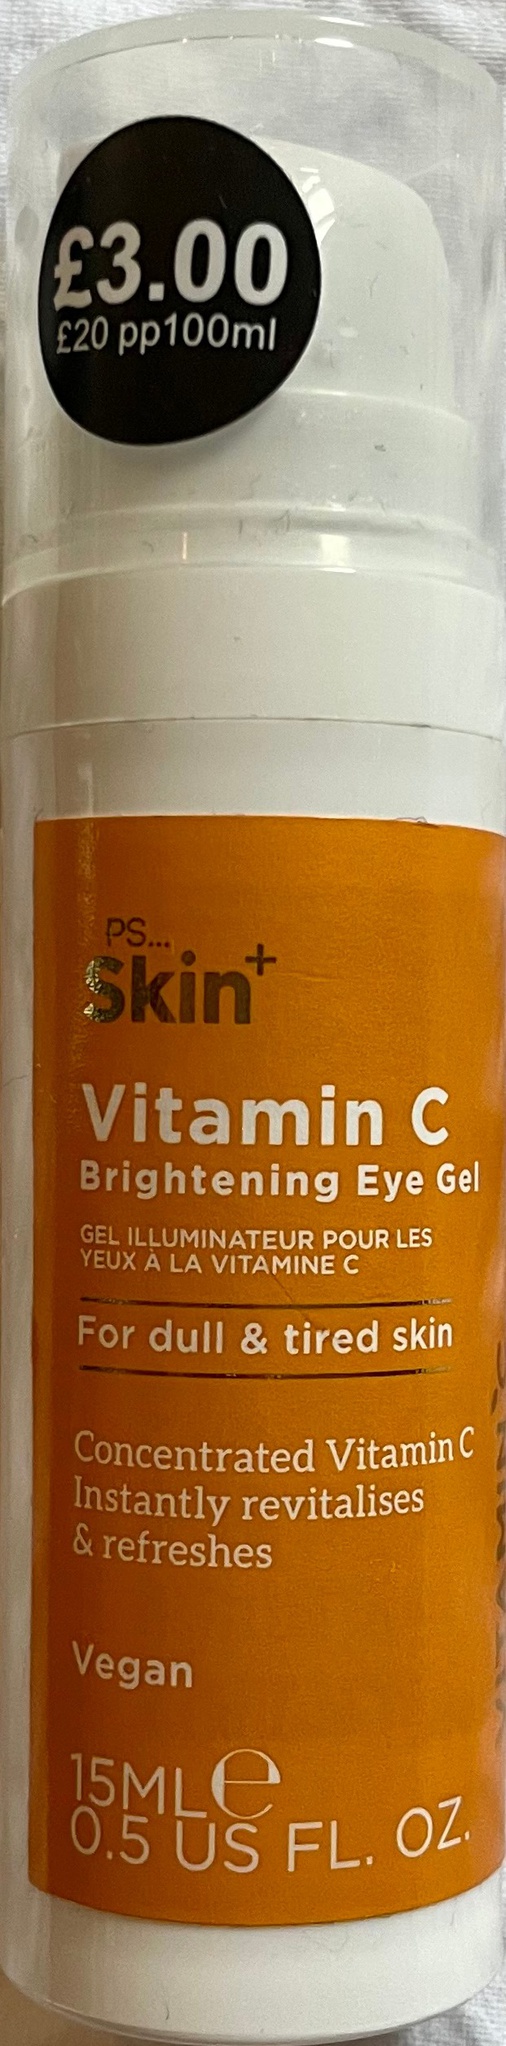 PS…Skin Vitamin C Brightening Eye Gel